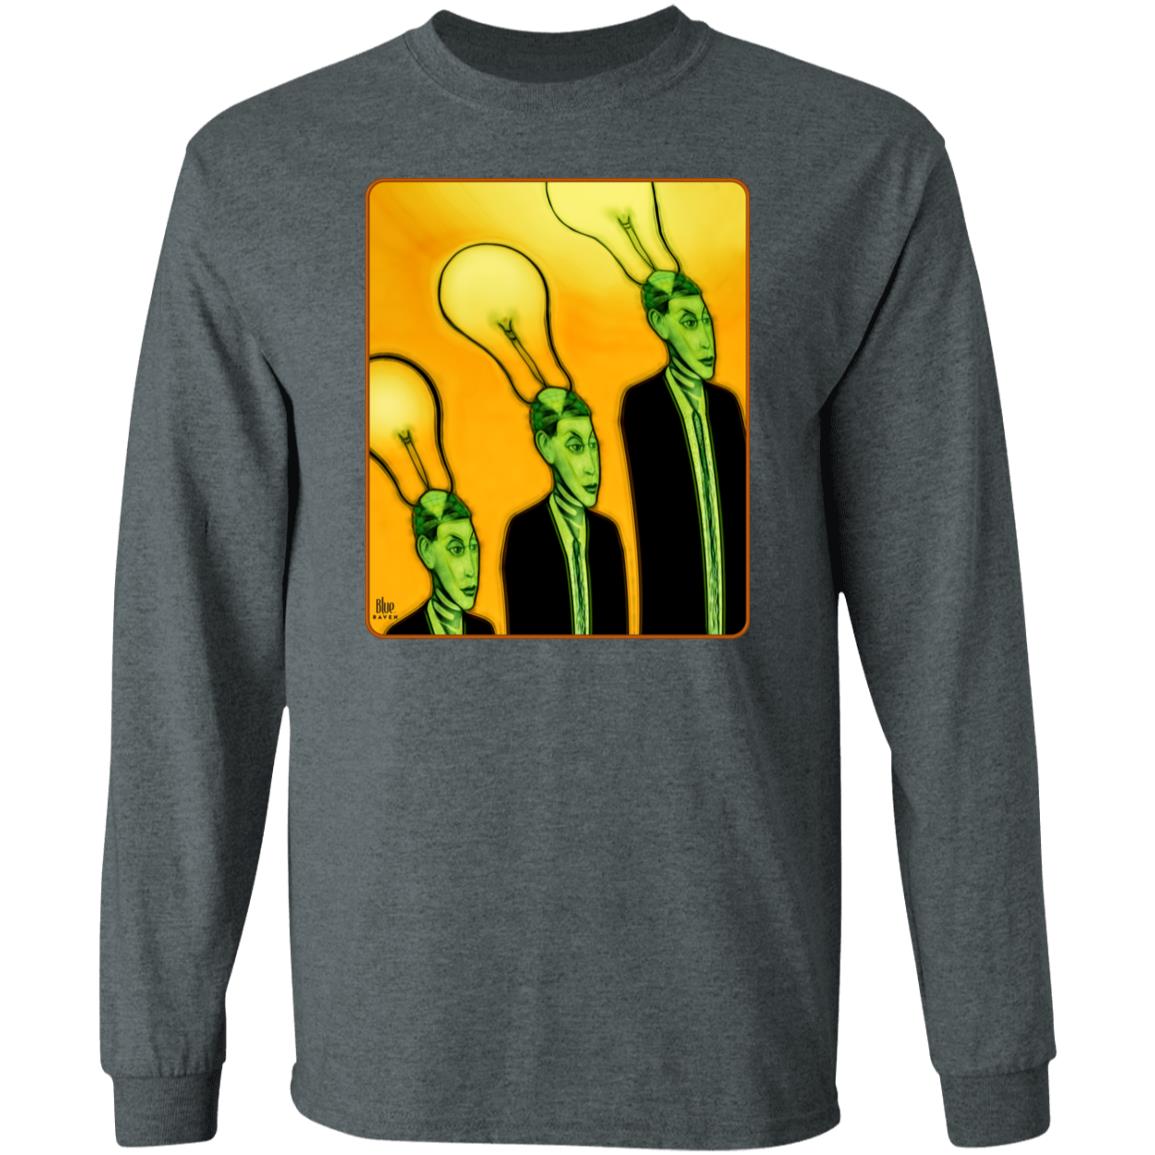 Brighter Idea - Men's Long Sleeve T-Shirt